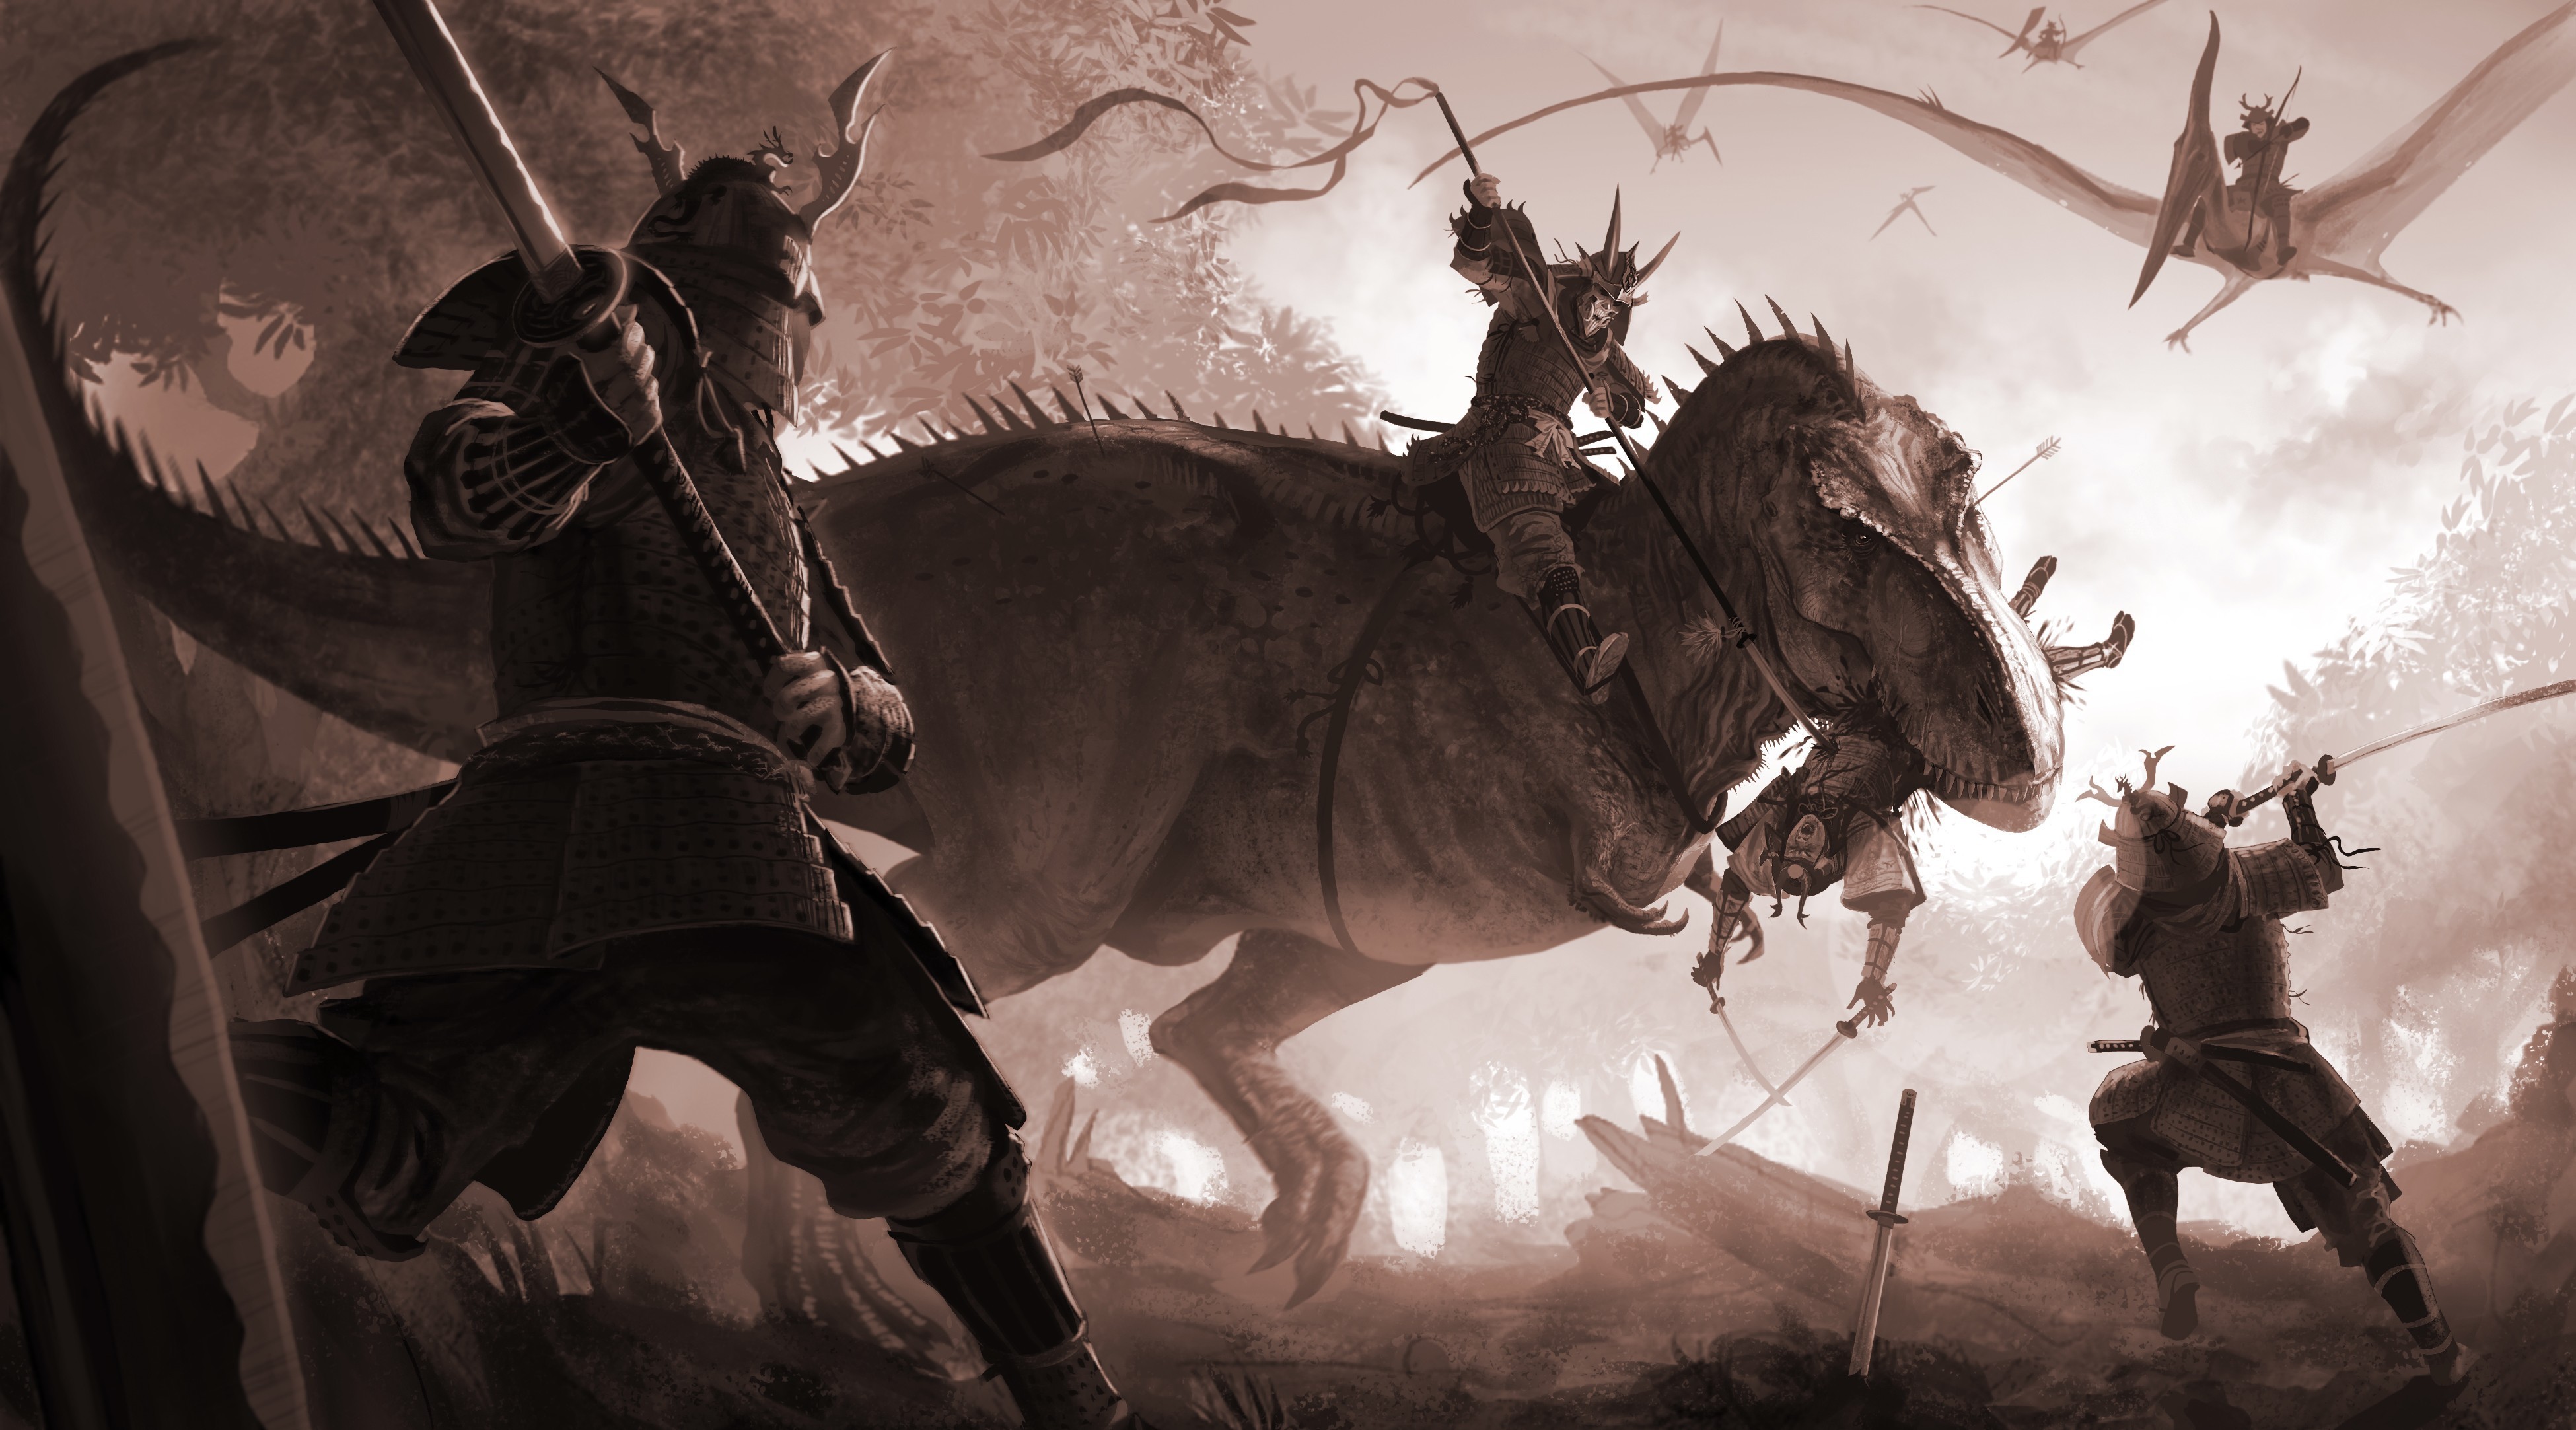 246417 descargar imagen dinosaurio, fantasía, batalla, caballero, guerrero: fondos de pantalla y protectores de pantalla gratis